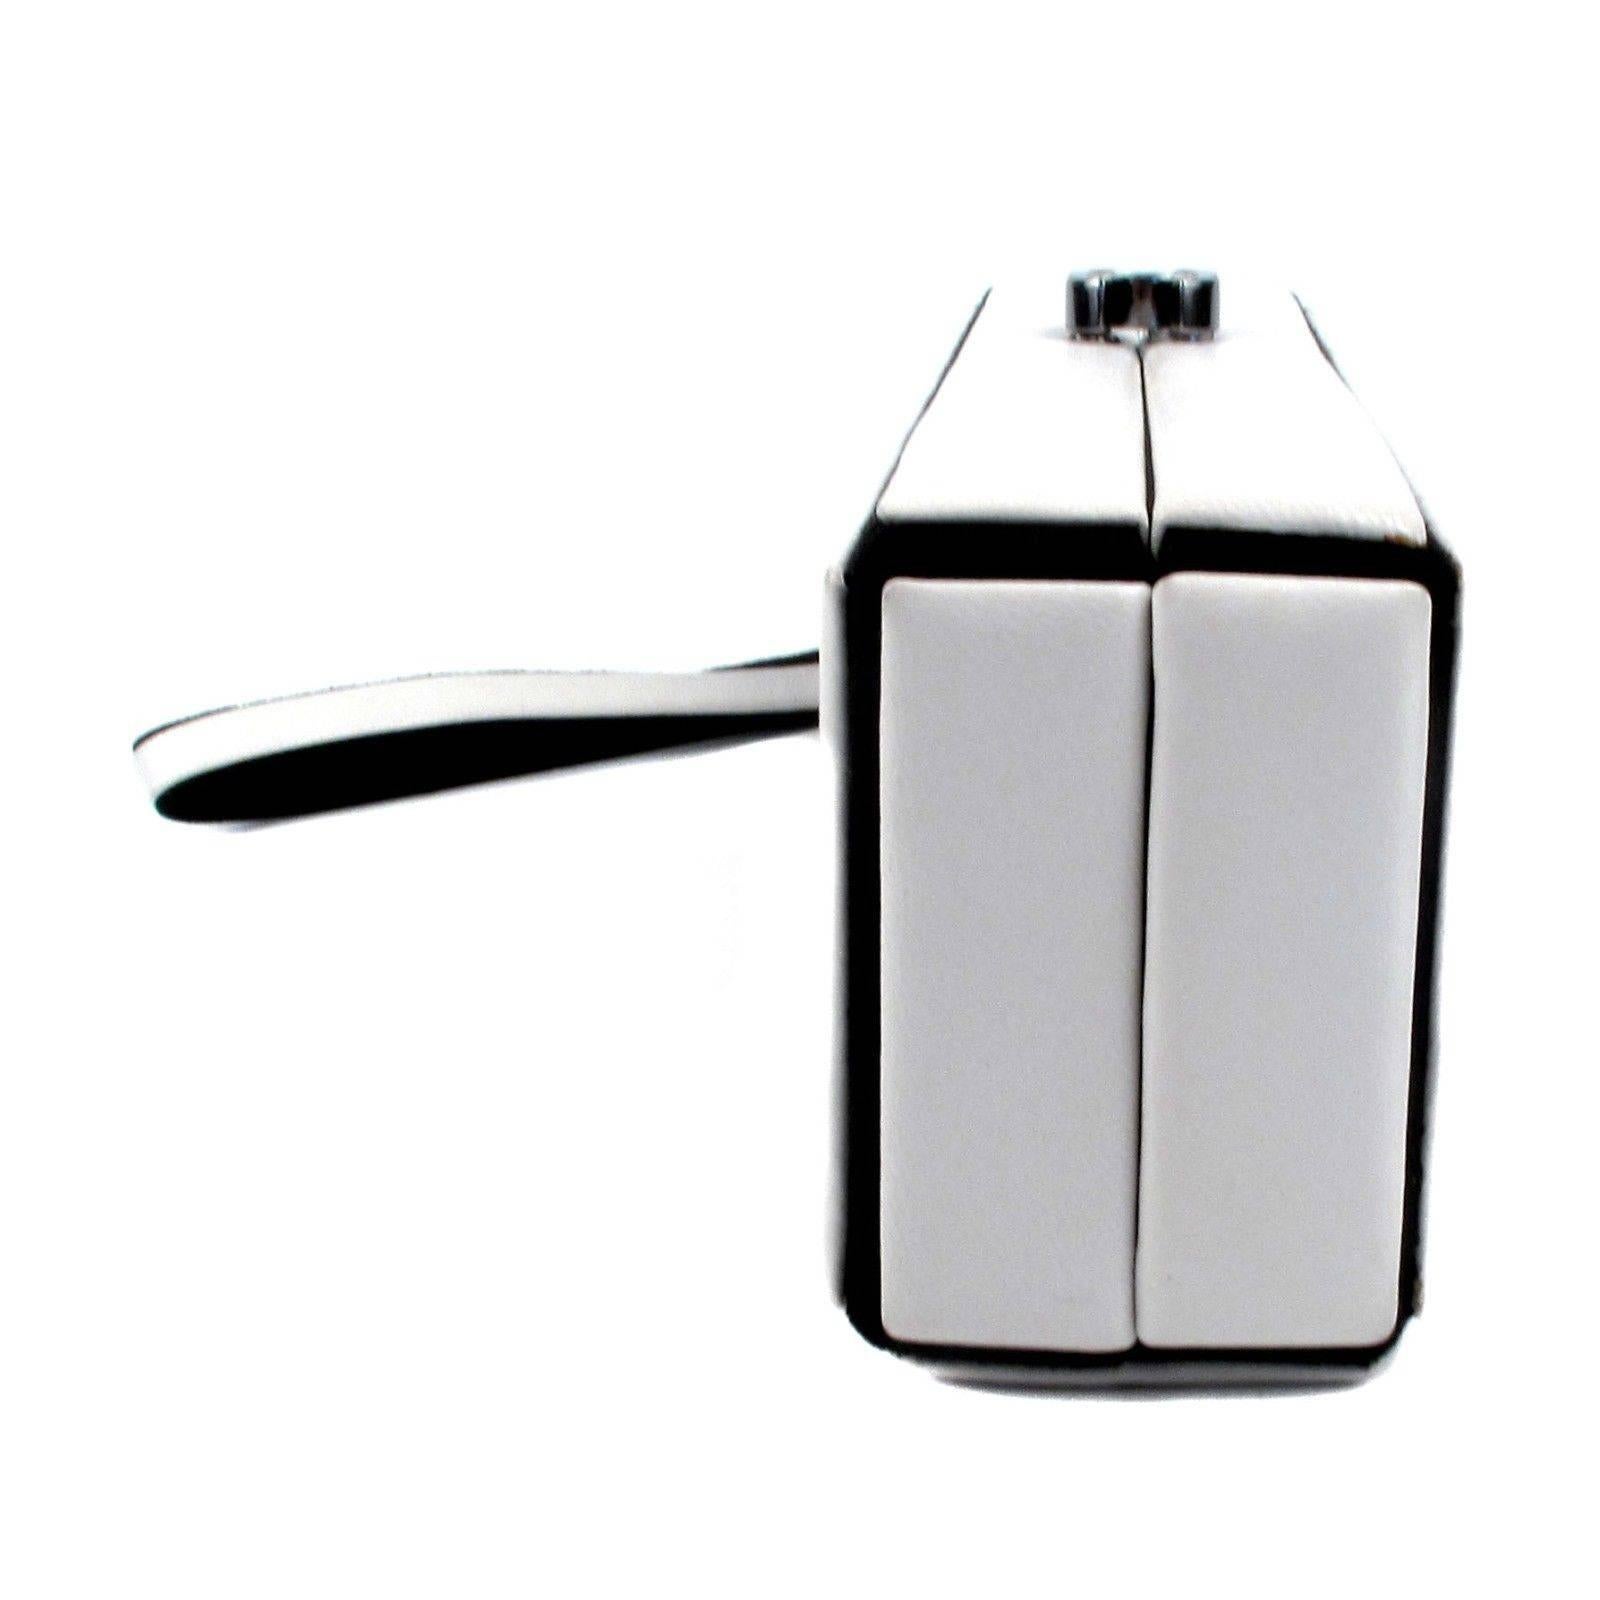 Chanel Clutch Box - Wristlet White & Black Leather CC Minaudie Bag Handbag Case 1